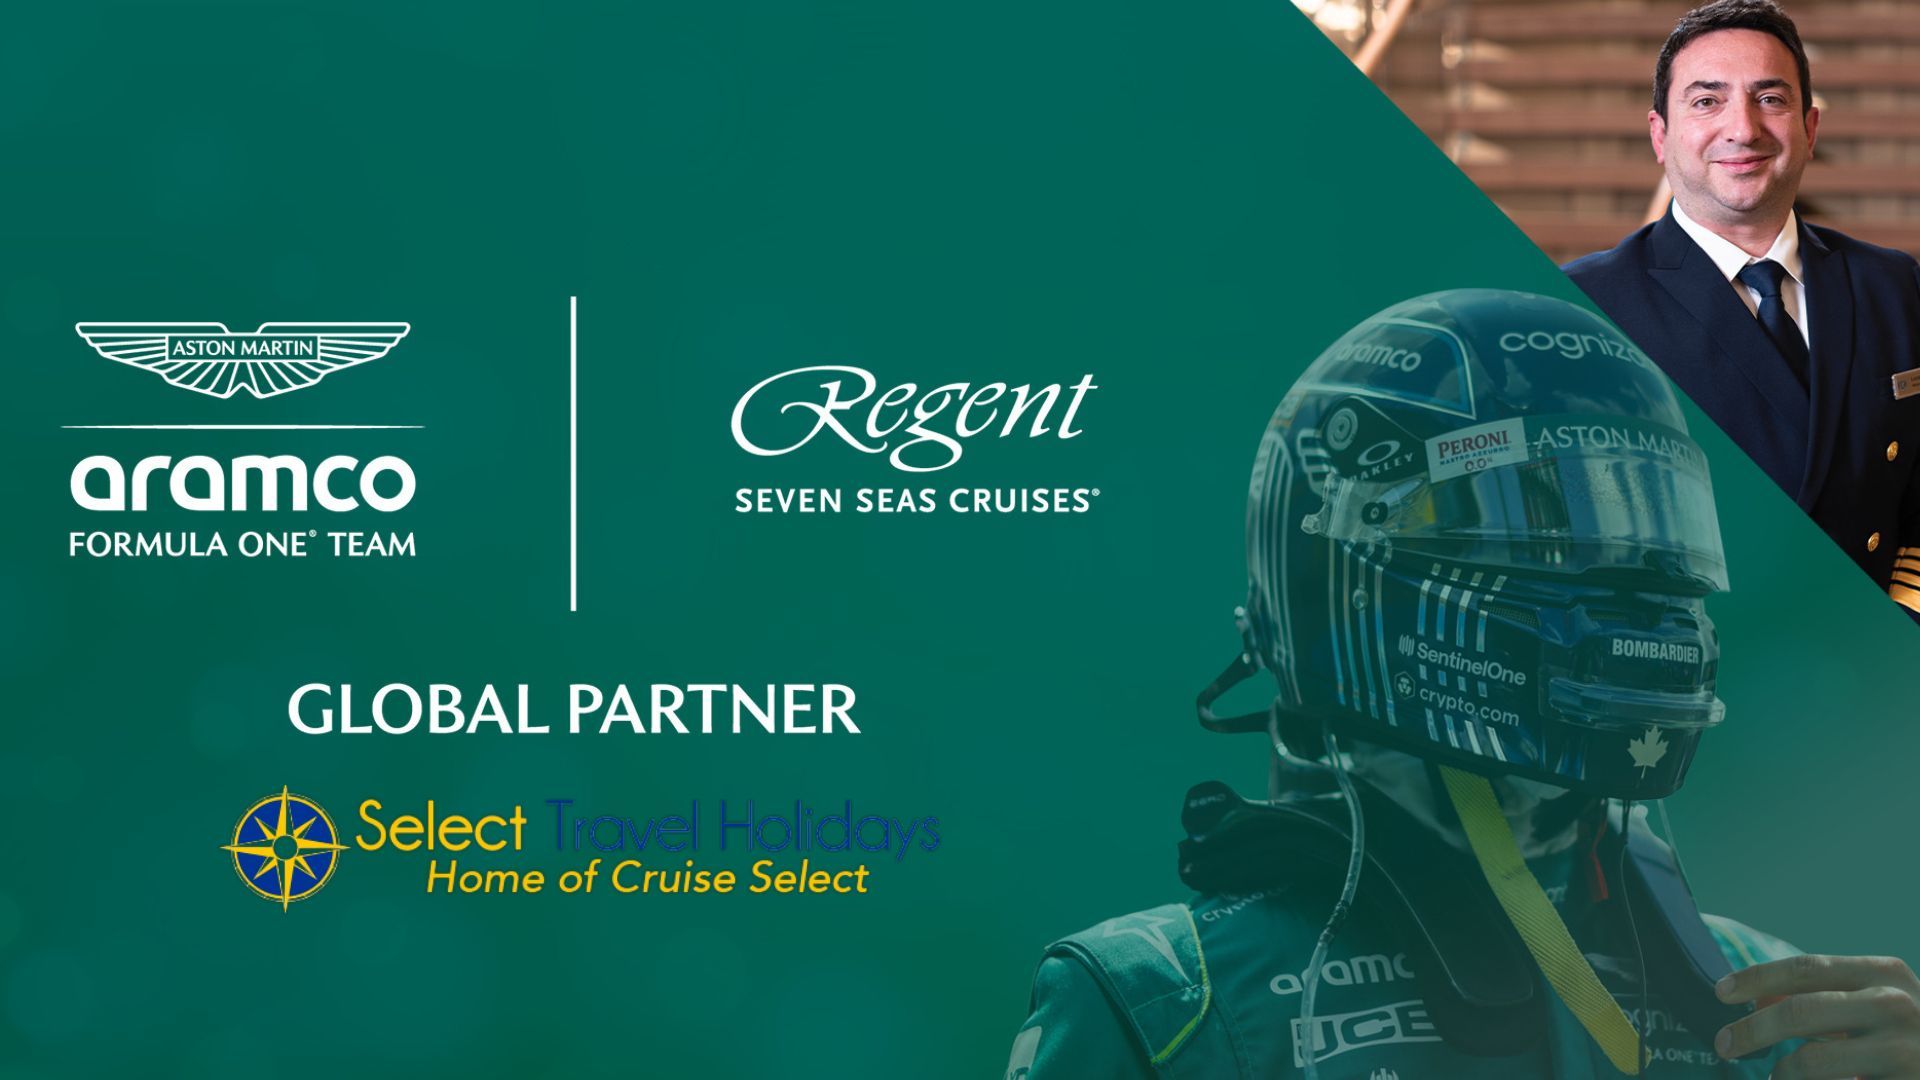 Regent Seven Seas Cruises and Aston Martin Aramco Formula One